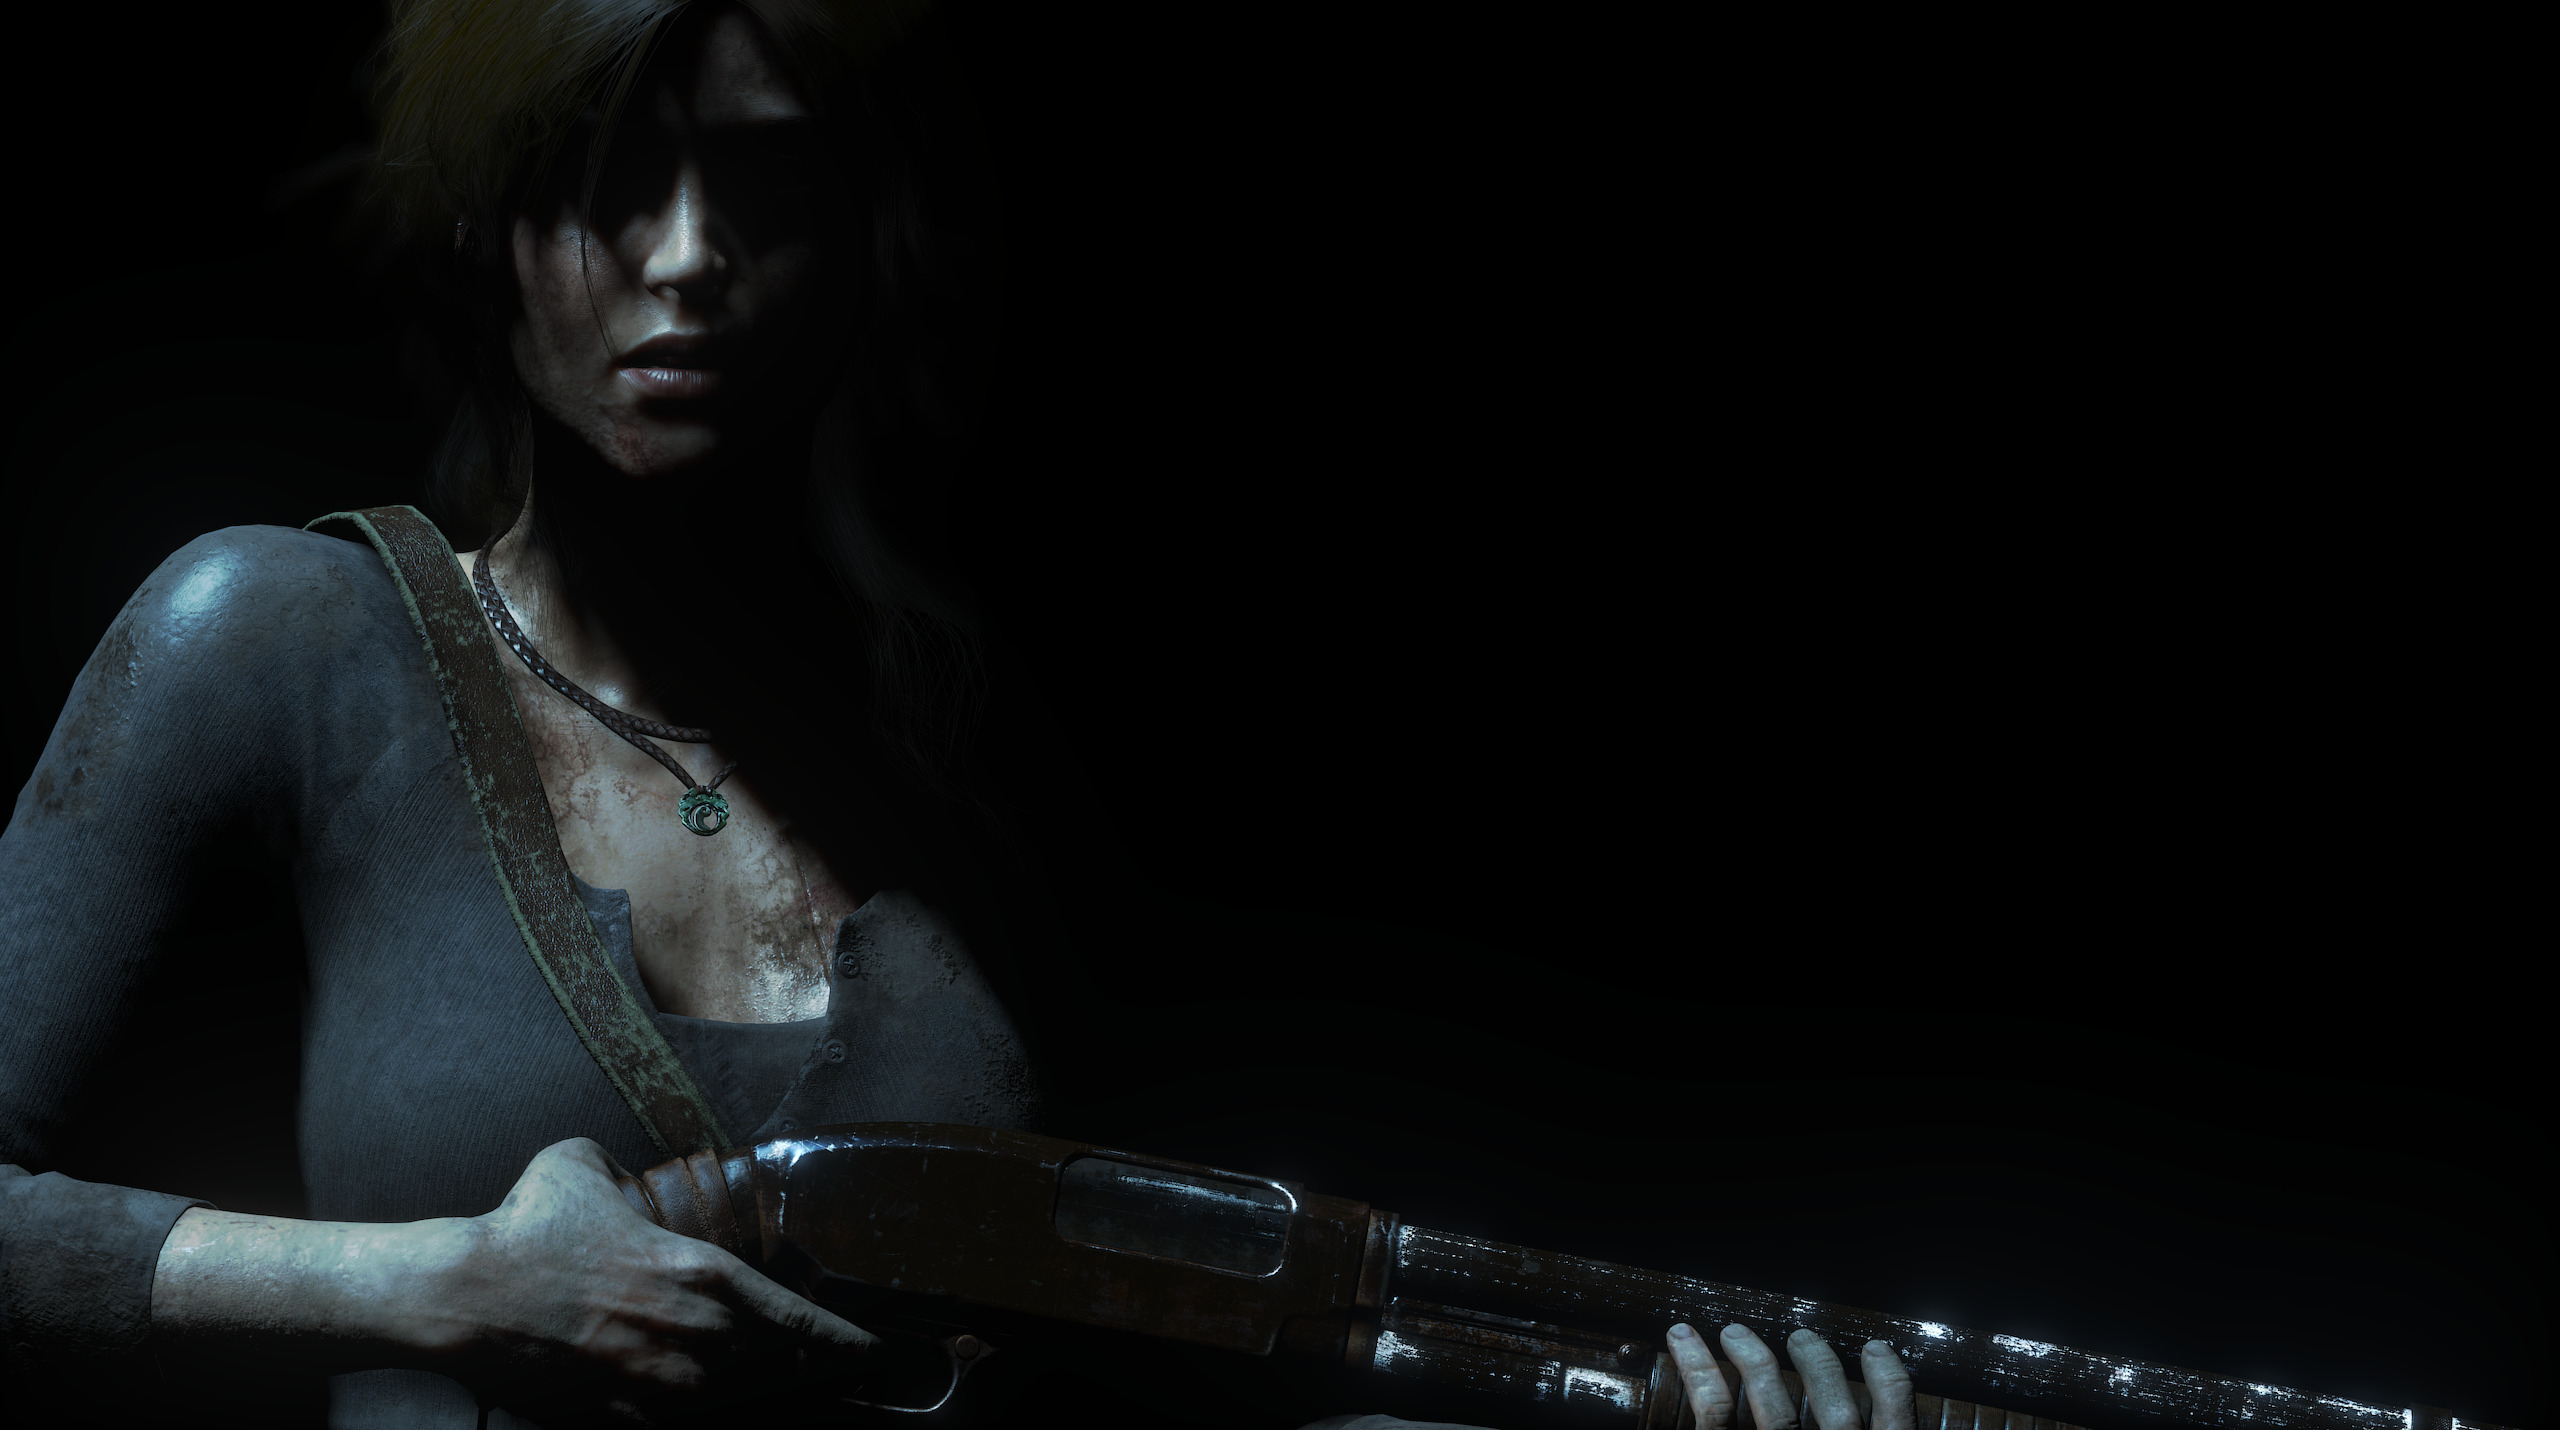 Lara Croft, Tomb Raider, Rise of the Tomb Raider Wallpaper